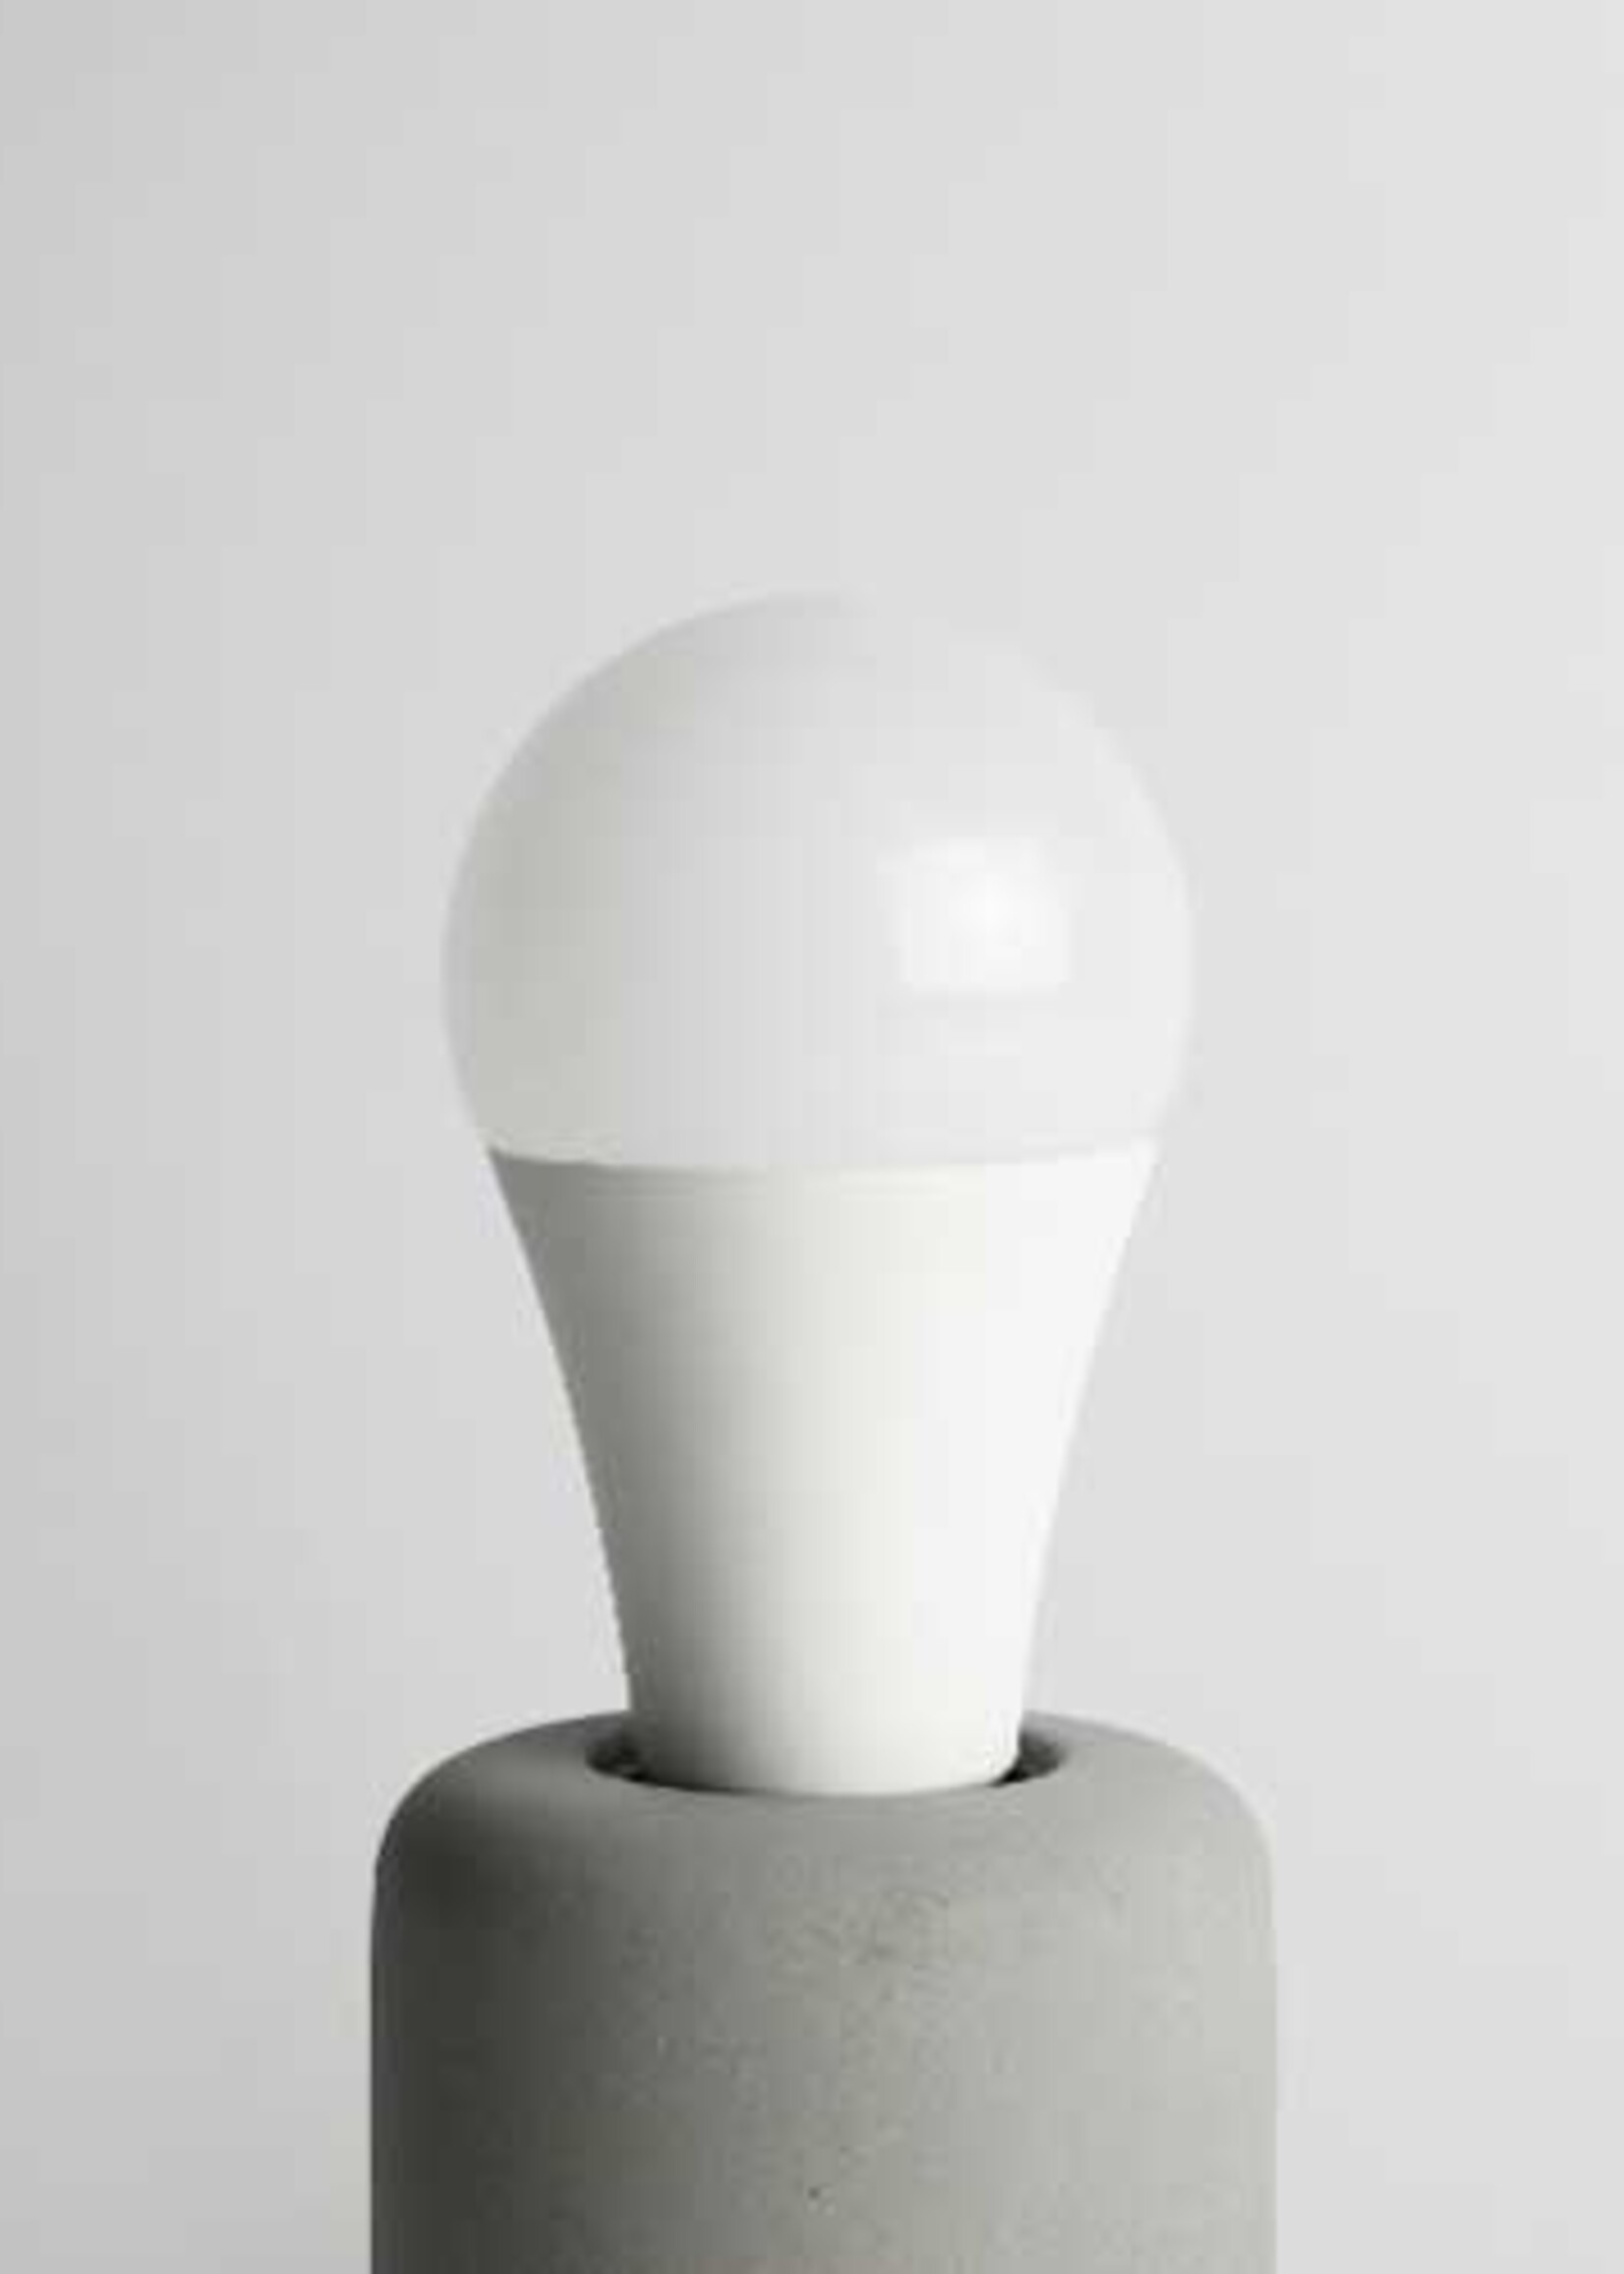 Smart Life E27 WiFi LED Lamp 7W RGB+CCT